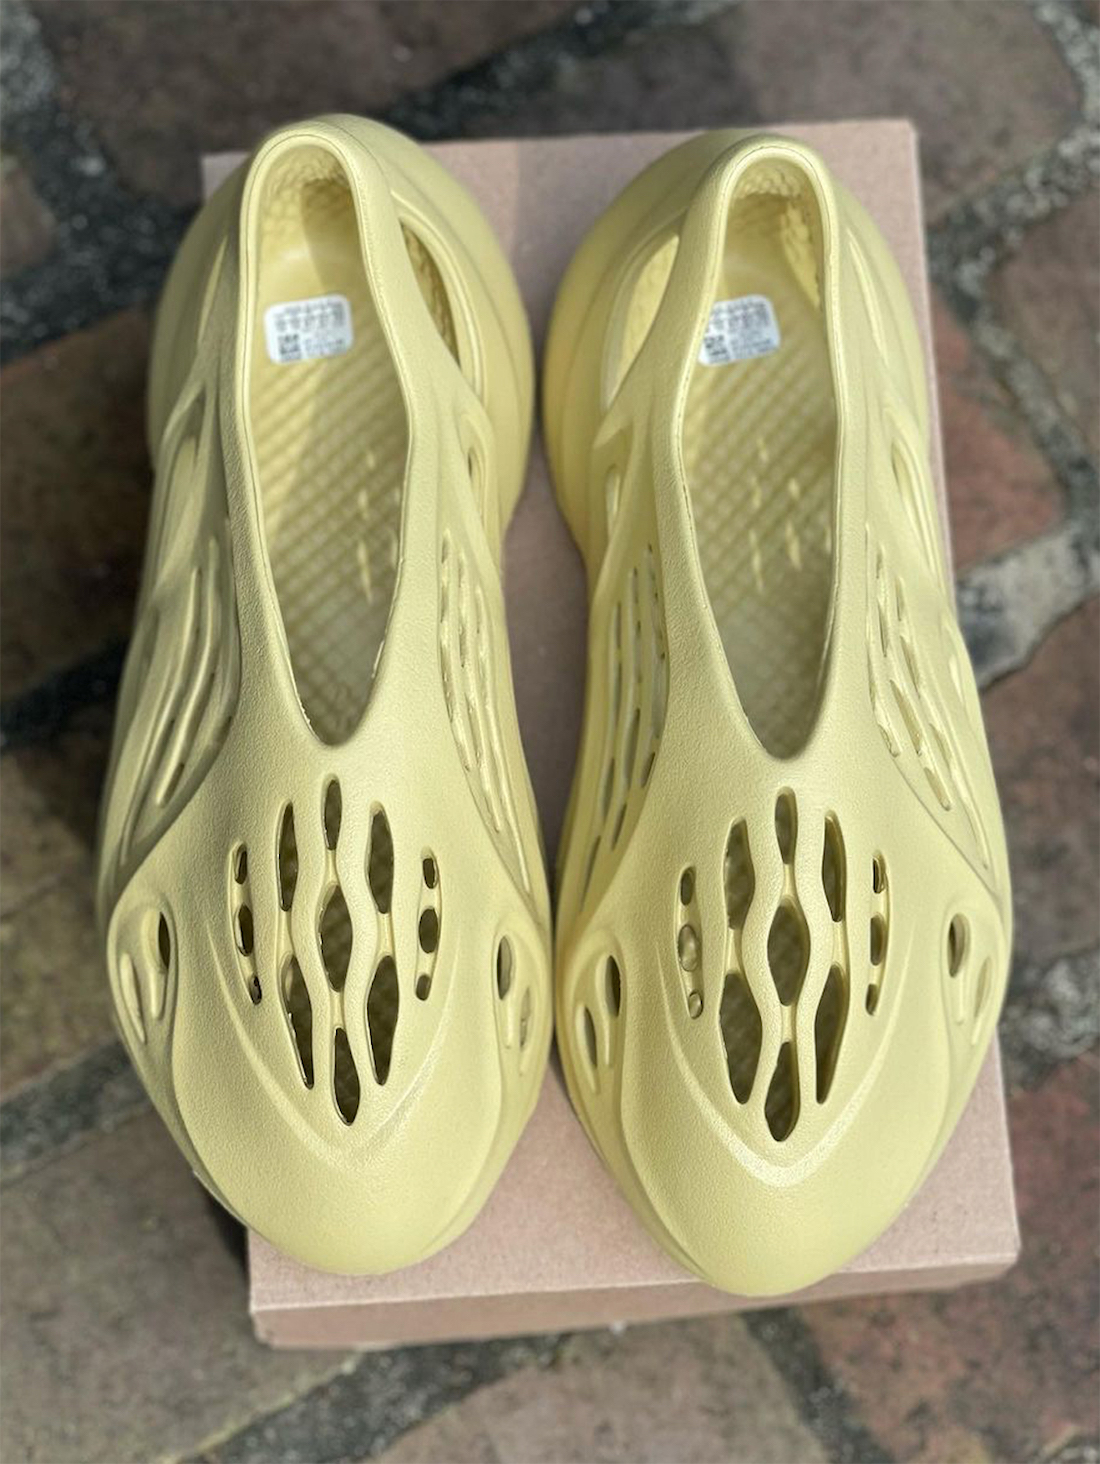 adidas Yeezy Foam Runner Sulphur GV6775 Data di rilascio